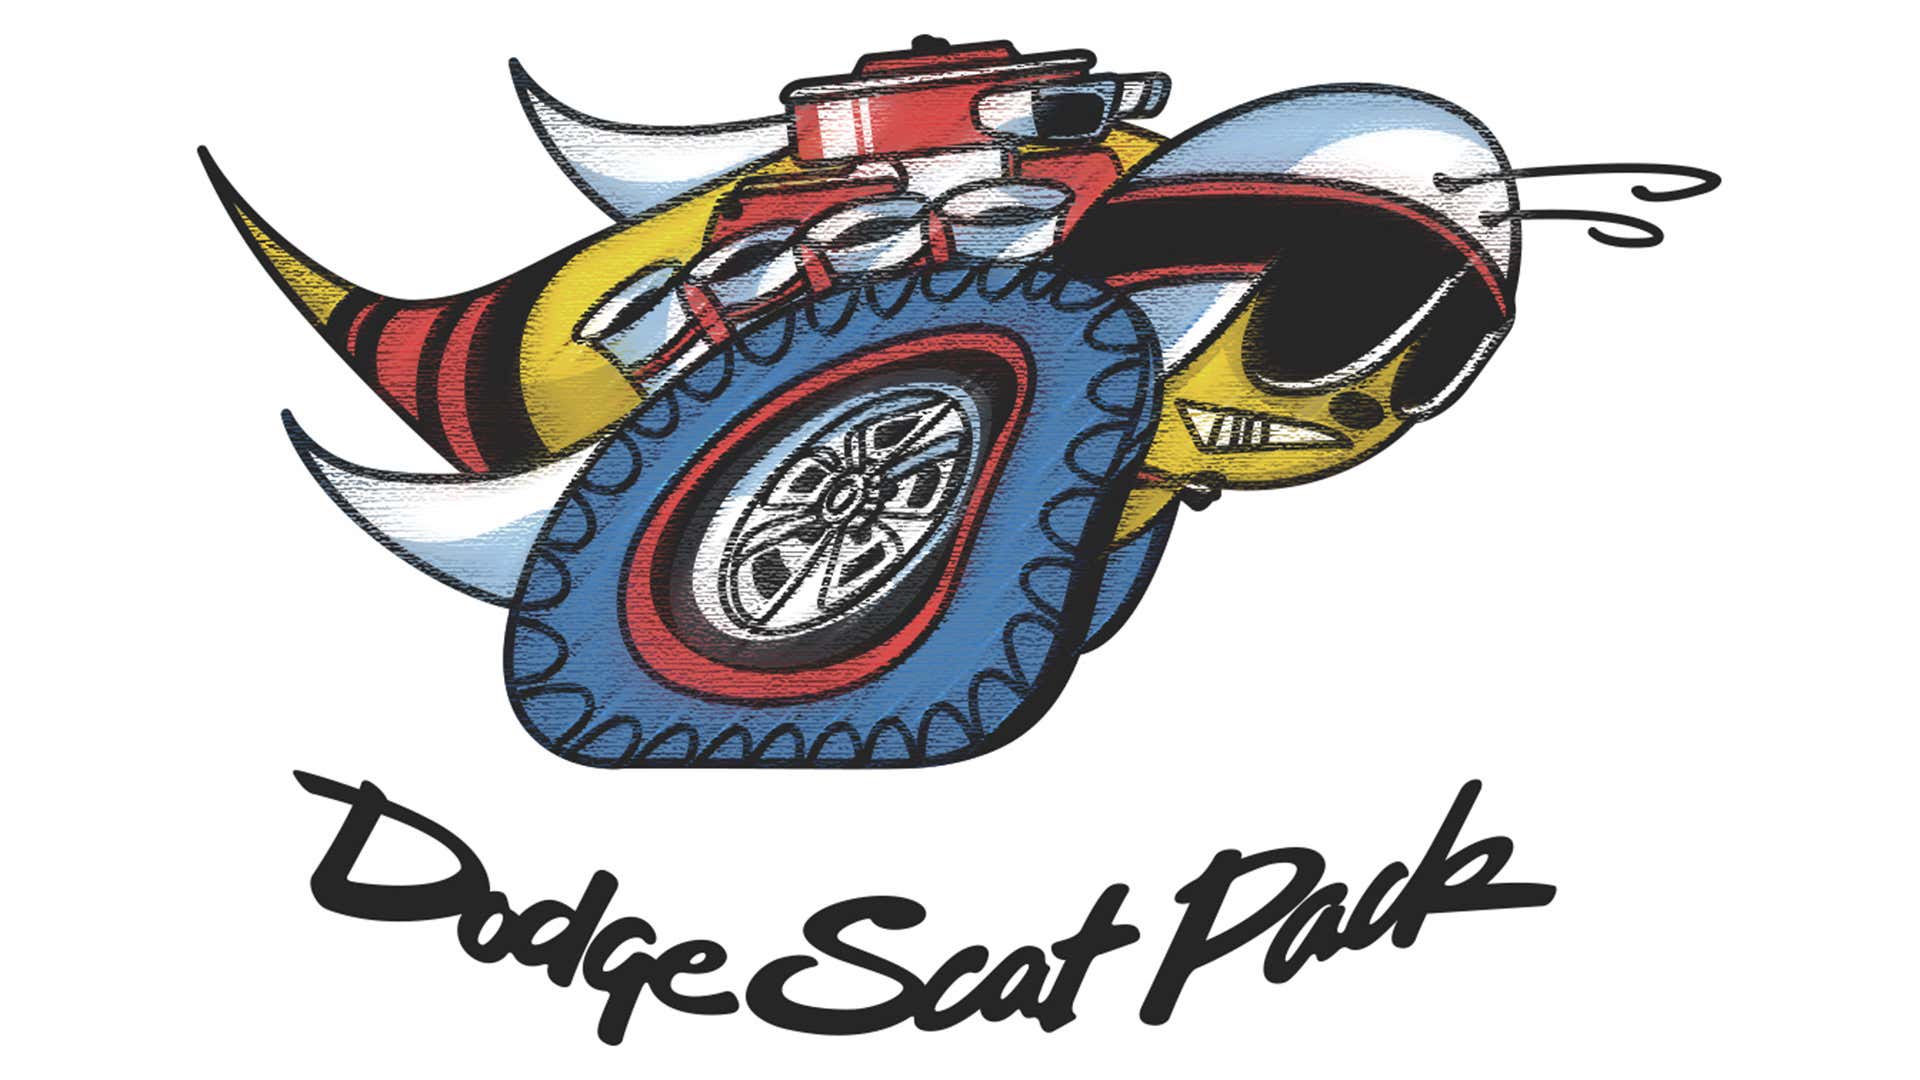 Dodge Scat Pack bee的特点是轮胎，引擎部件，头盔和护目镜作为设计的一部分。